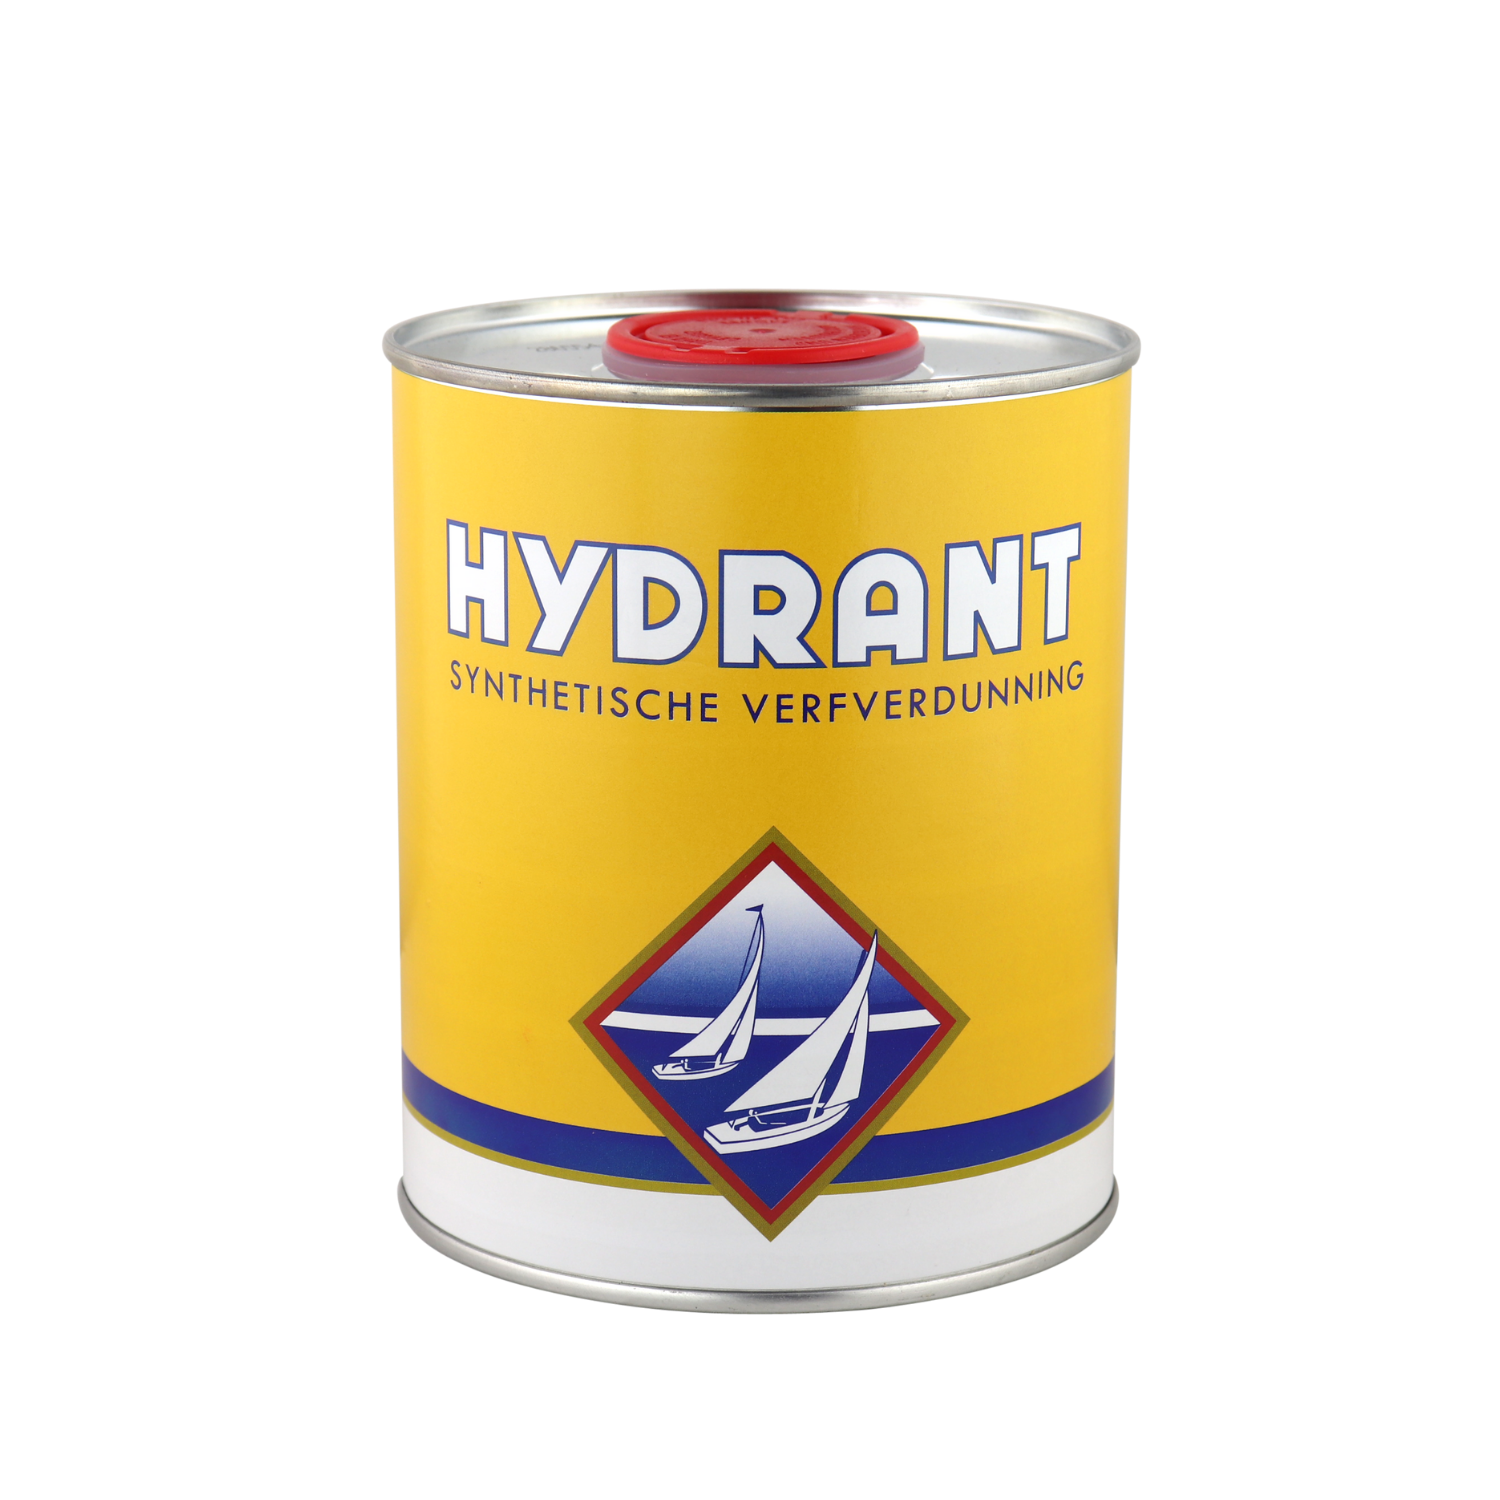 Hydrant synthetische verfverdunning2